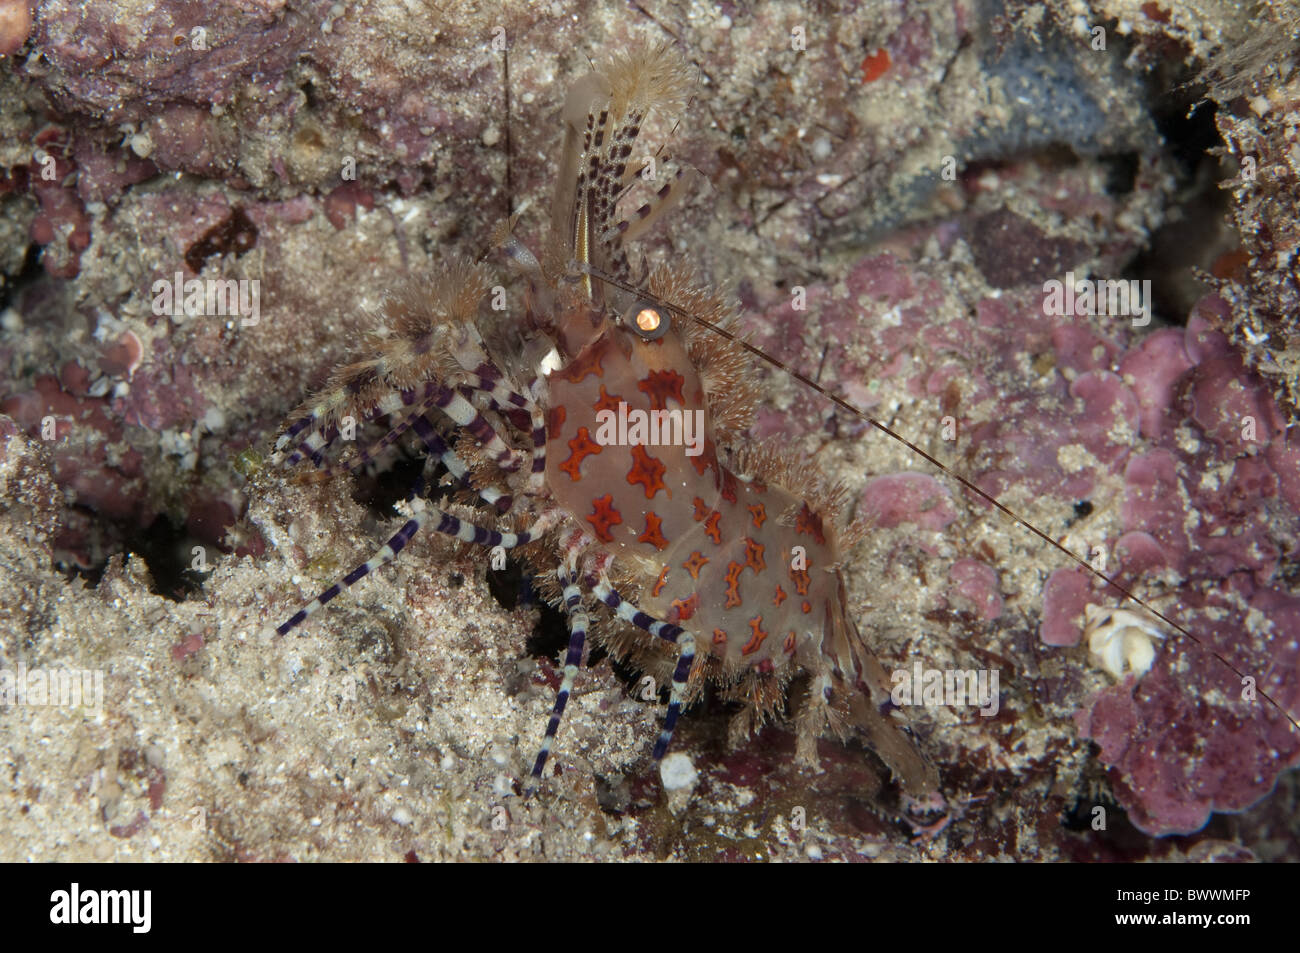 Saron Shrimp marmoratus Crustacean Maluku Divers Reef Marine Sea Underwater Diving Night Dive Ambon Indonesia animal animals Stock Photo